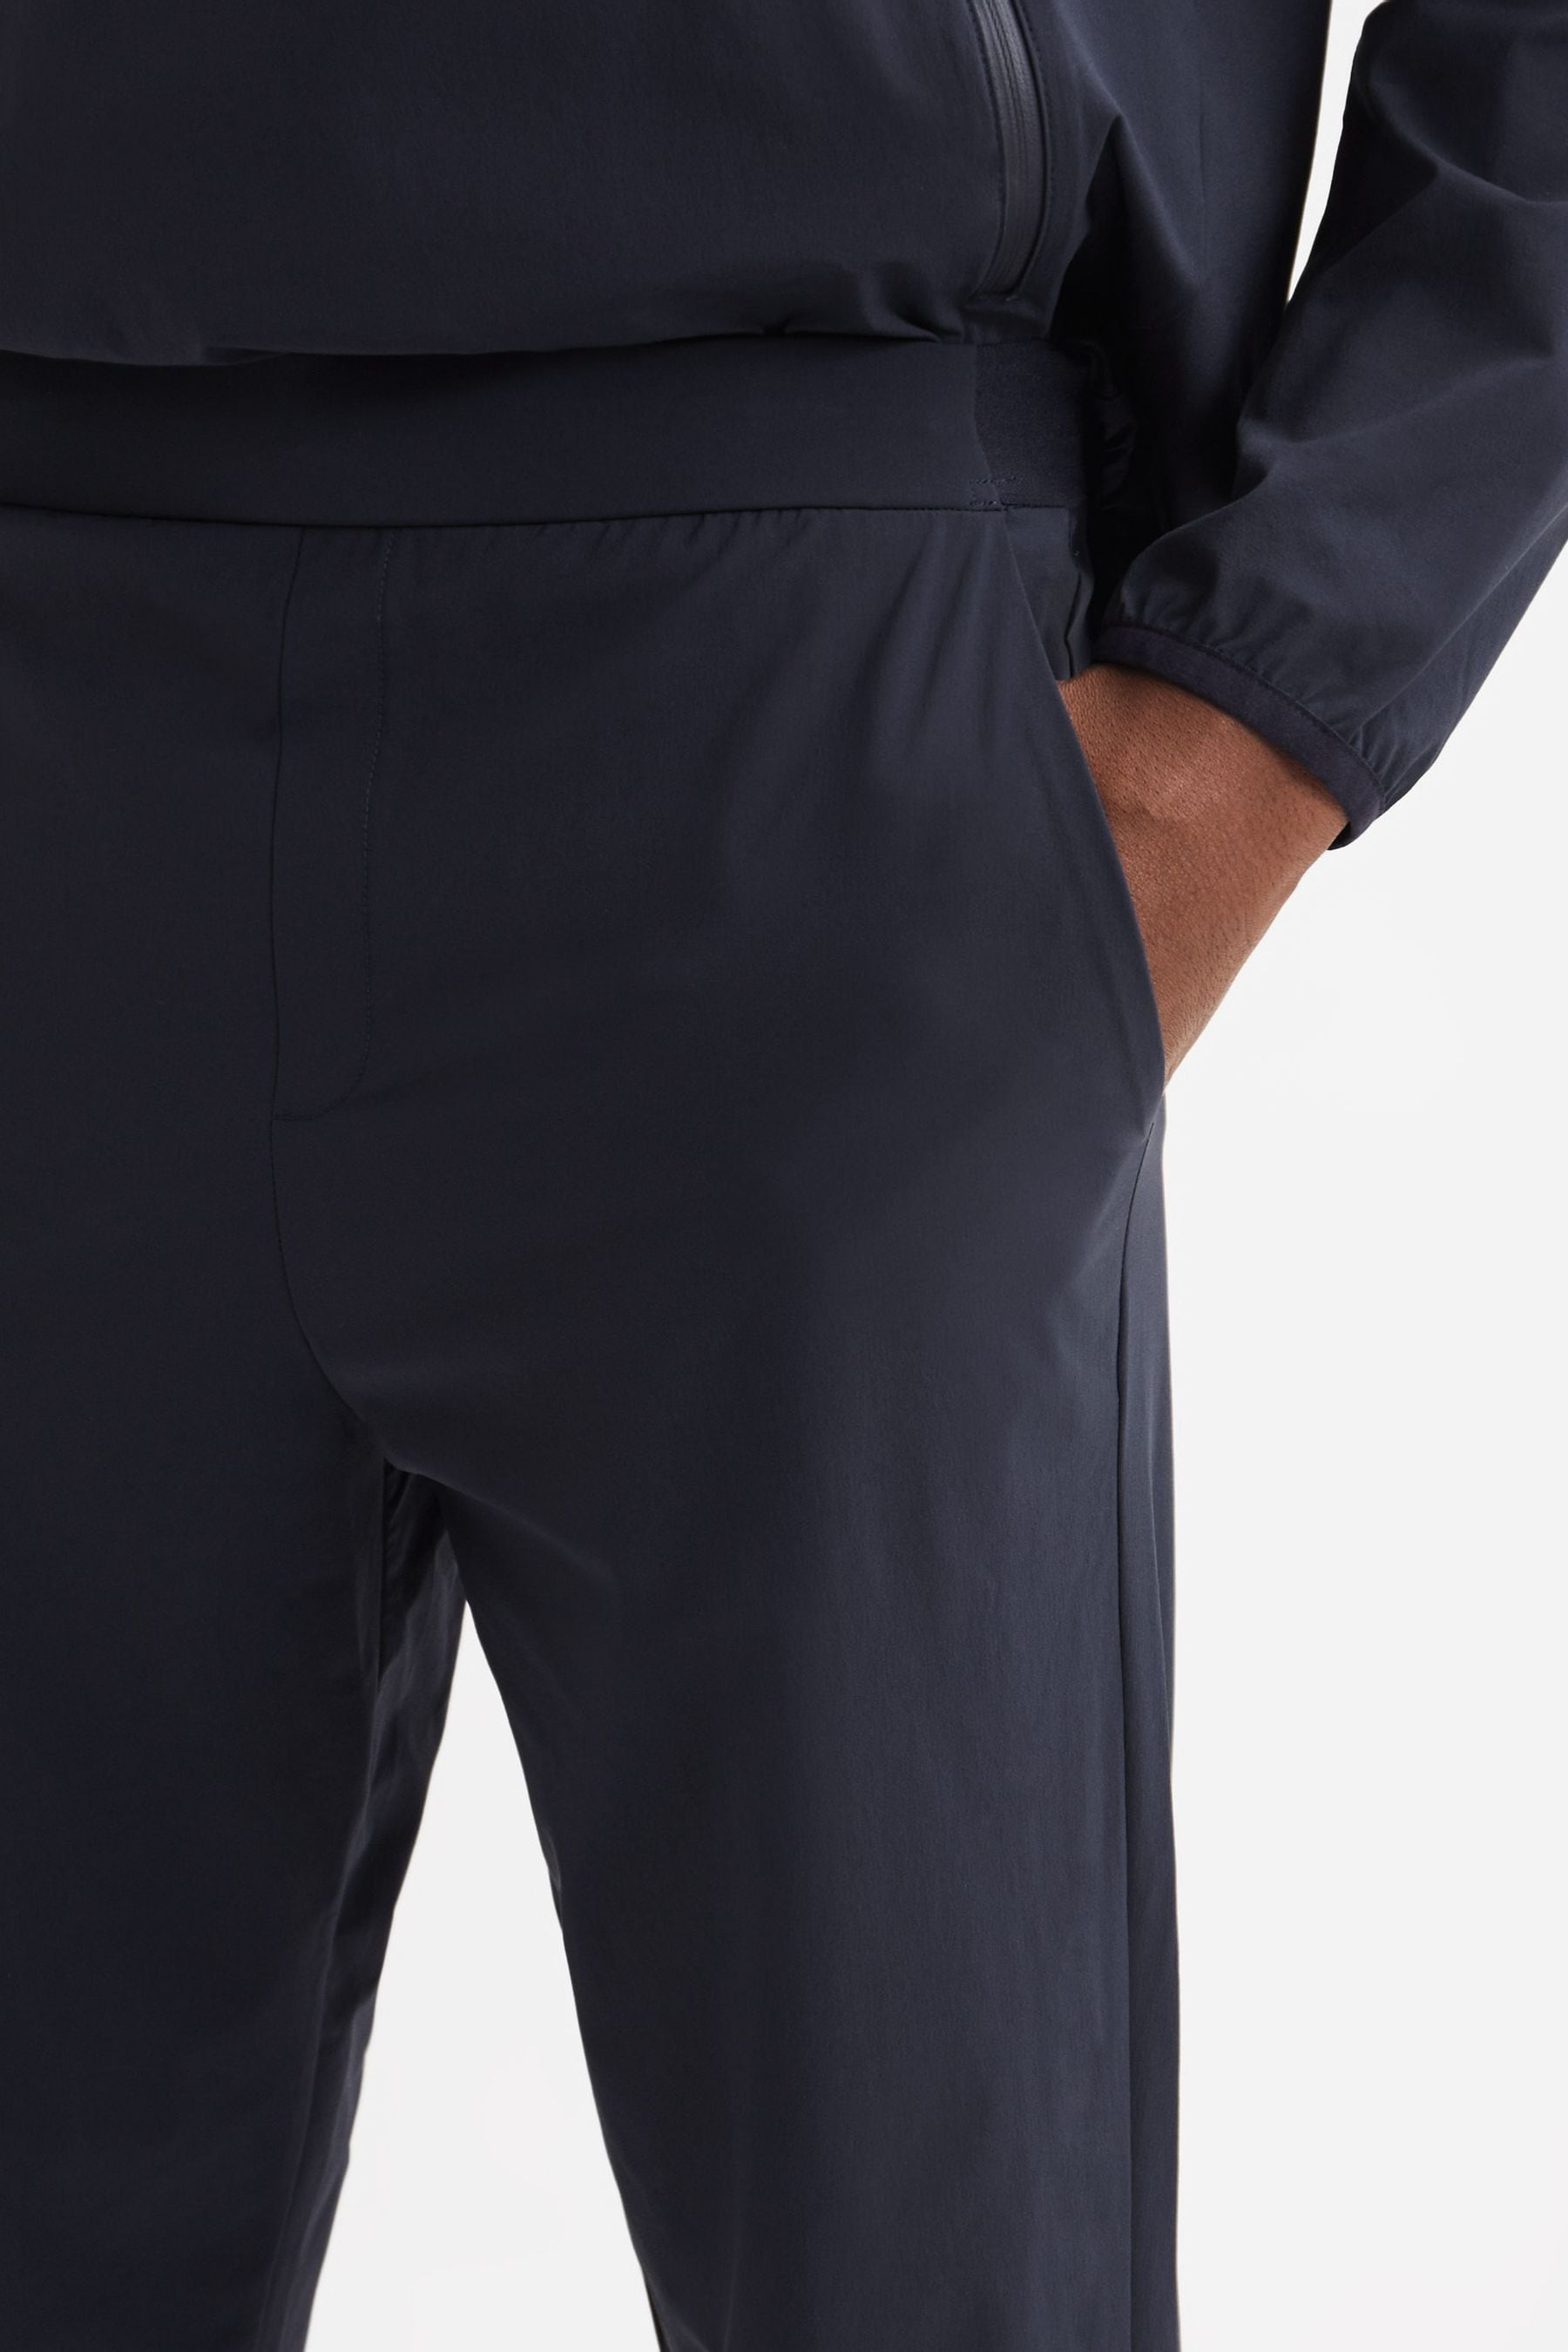 Buy Reiss Blue Castore - Noah Castore Hybrid Performance Trousers from ...